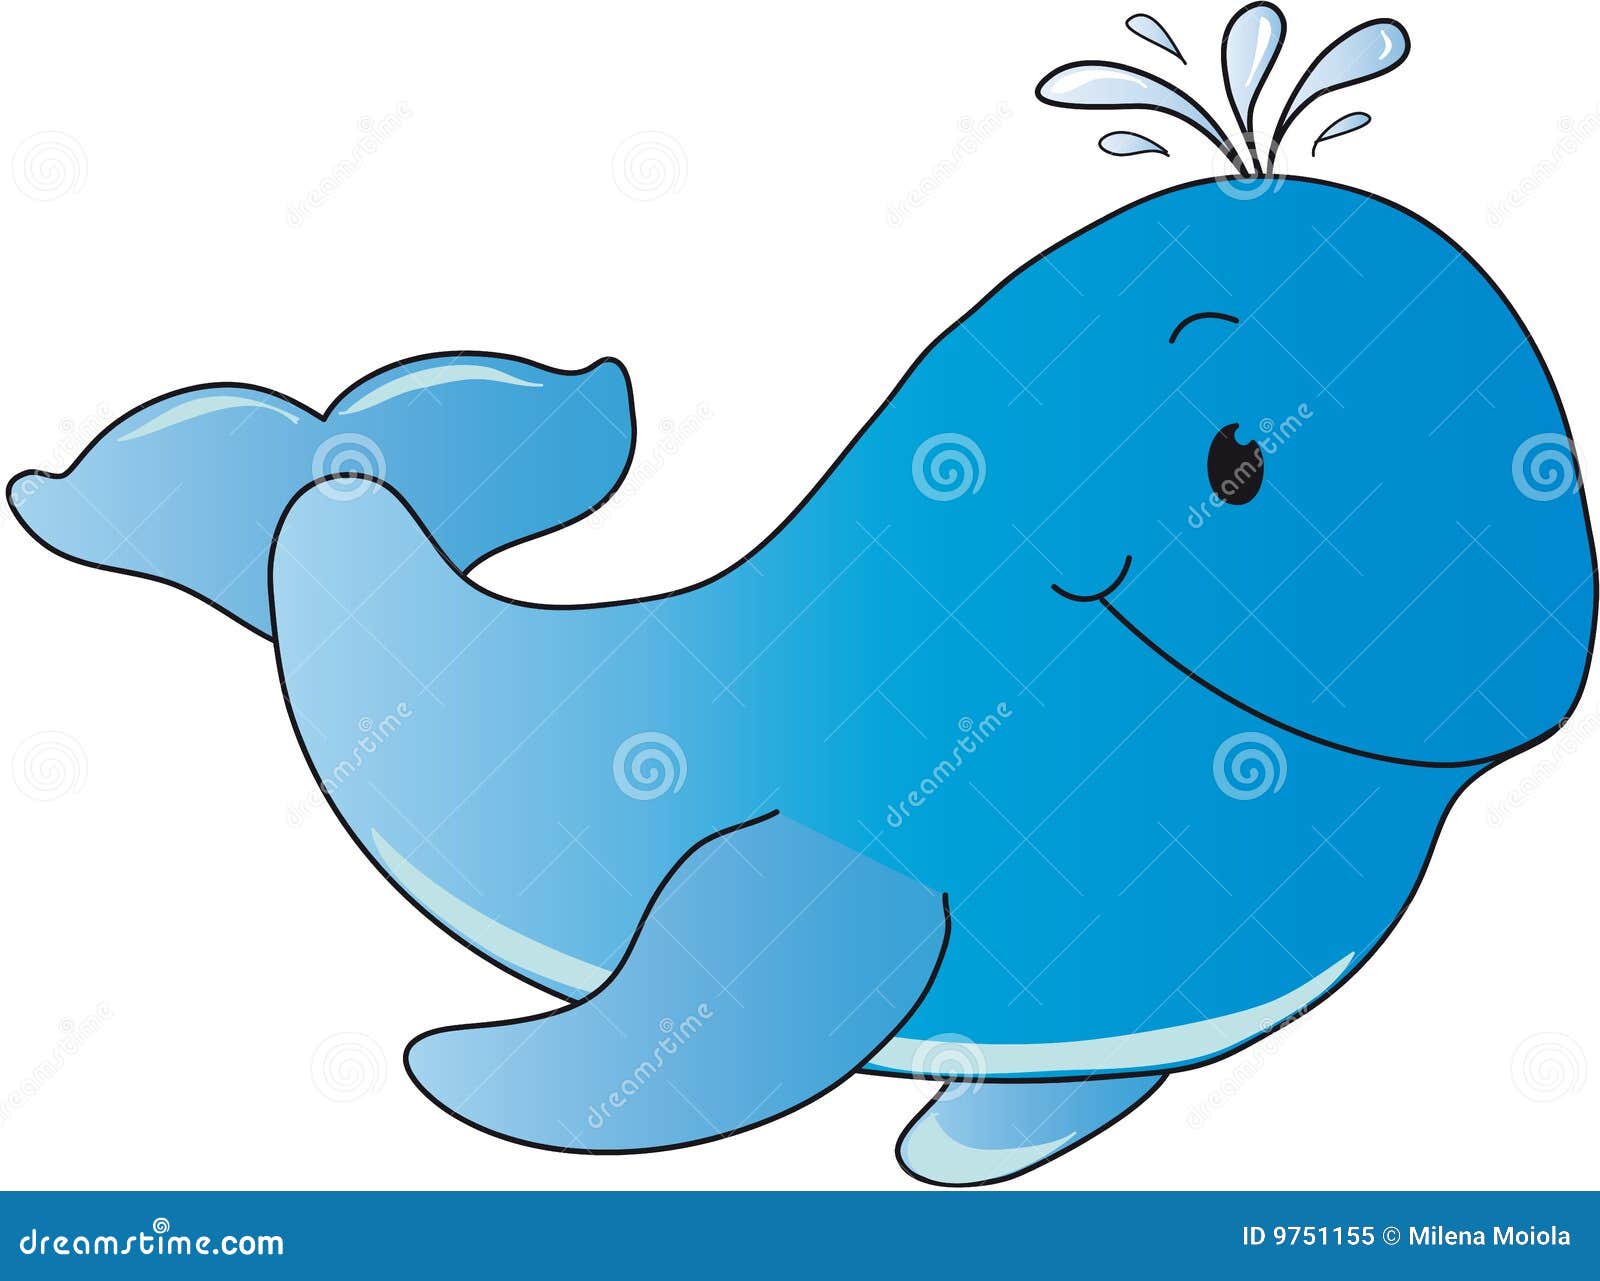 Whale stock illustration. Illustration of animal, humorous - 9751155